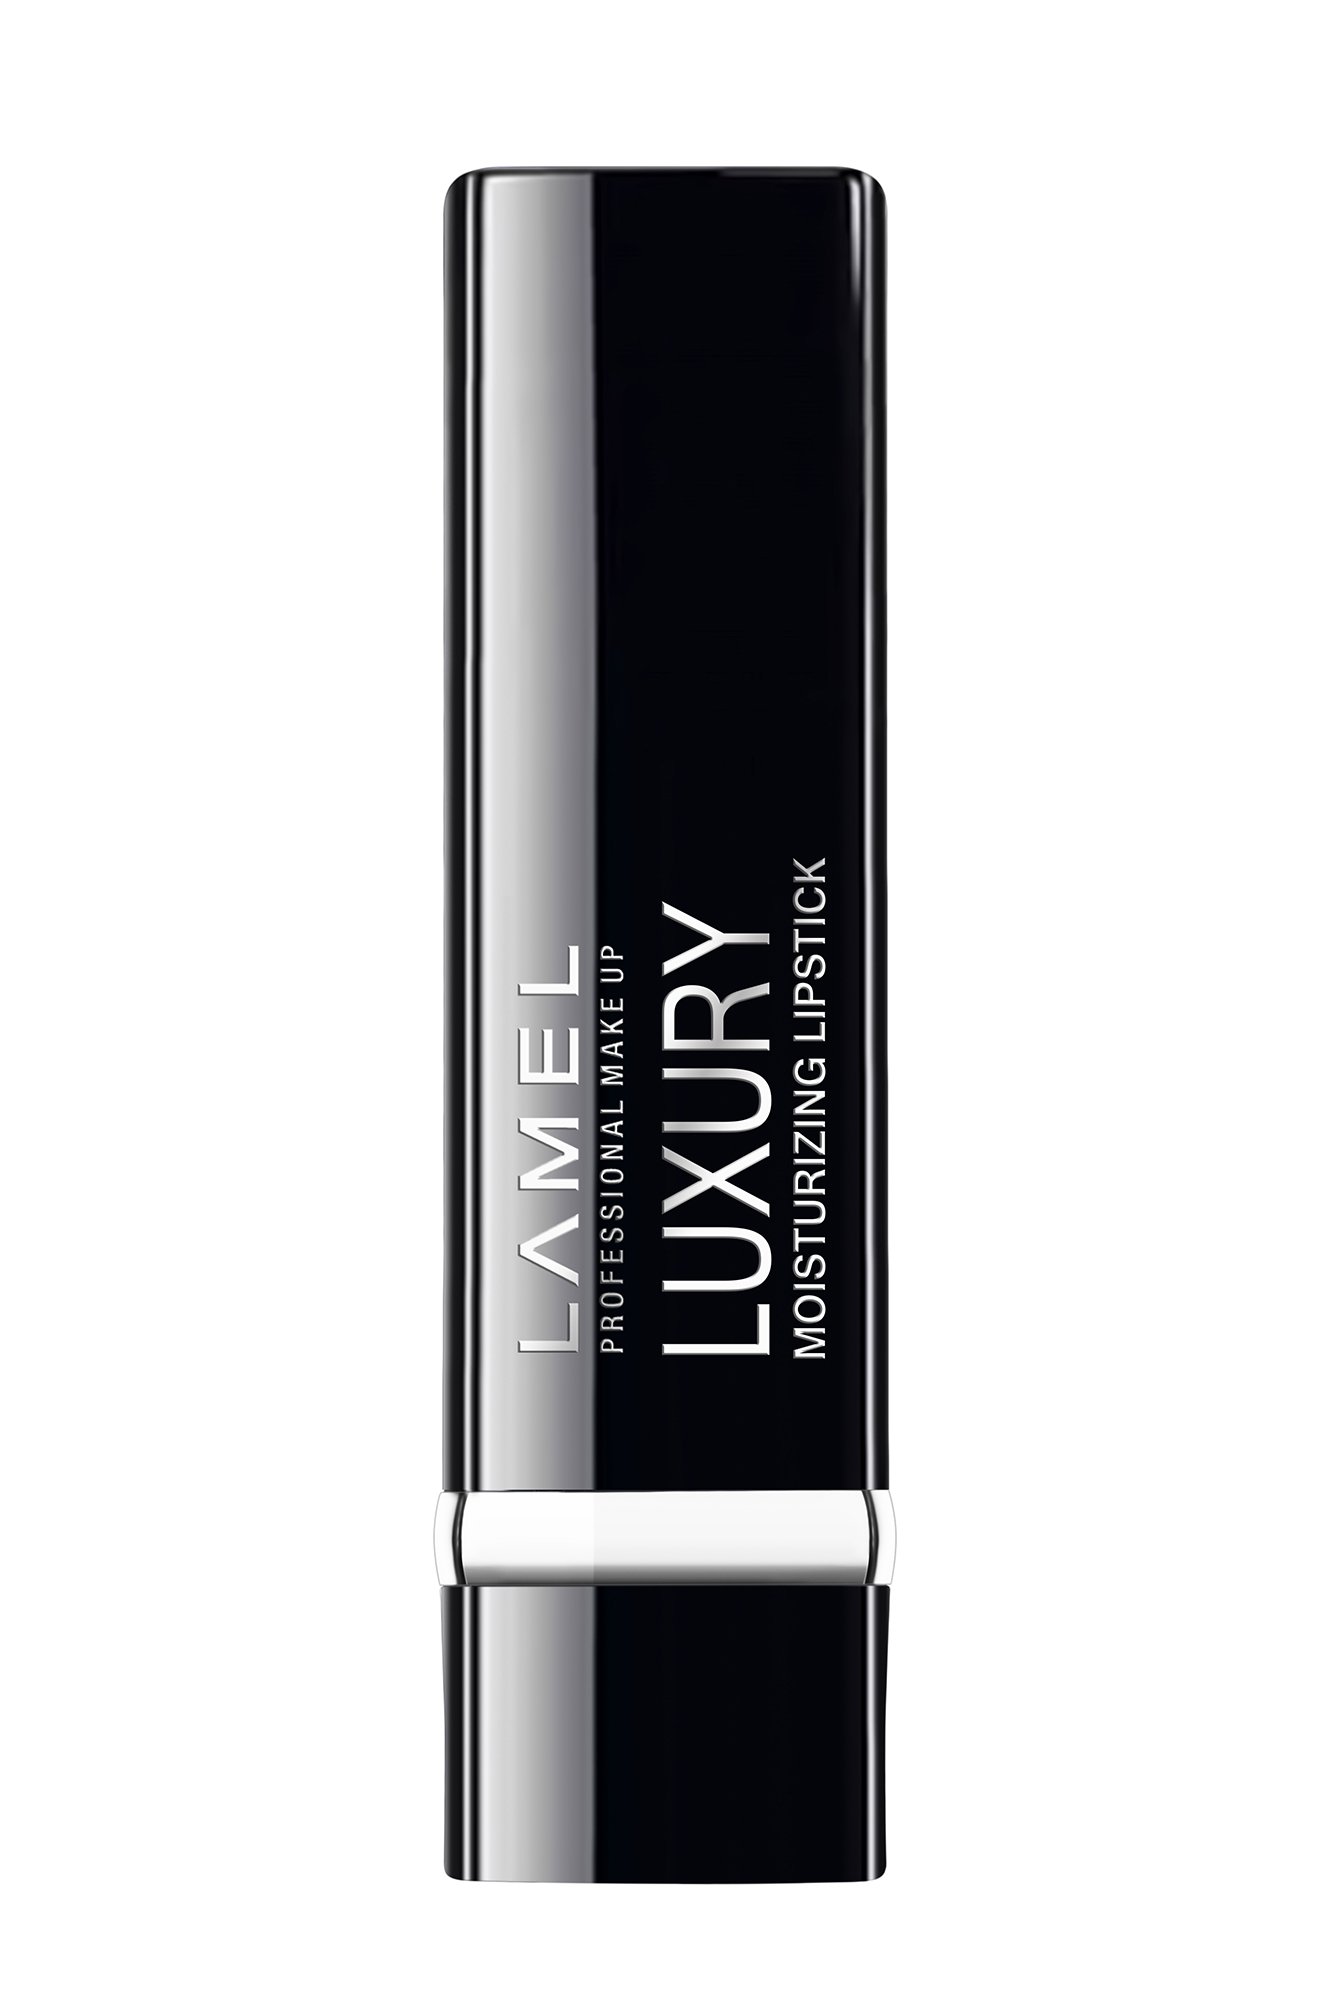 Помада для губ Luxury Moisturizing Lipstick т.407 shimmer pion 3,8 г LAMEL Professional